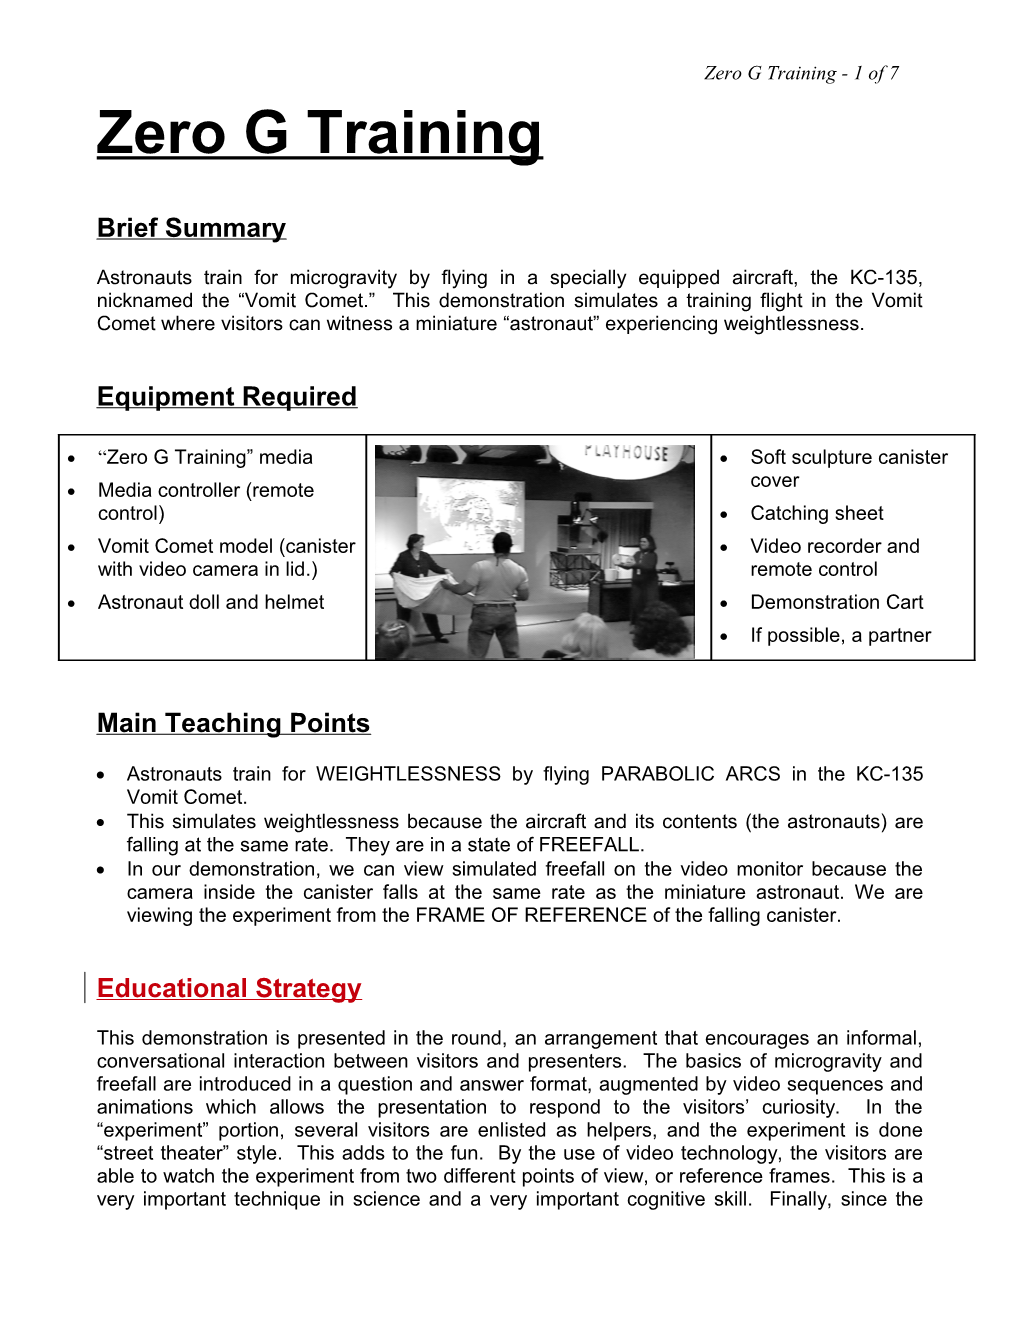 Training Manual Format s4